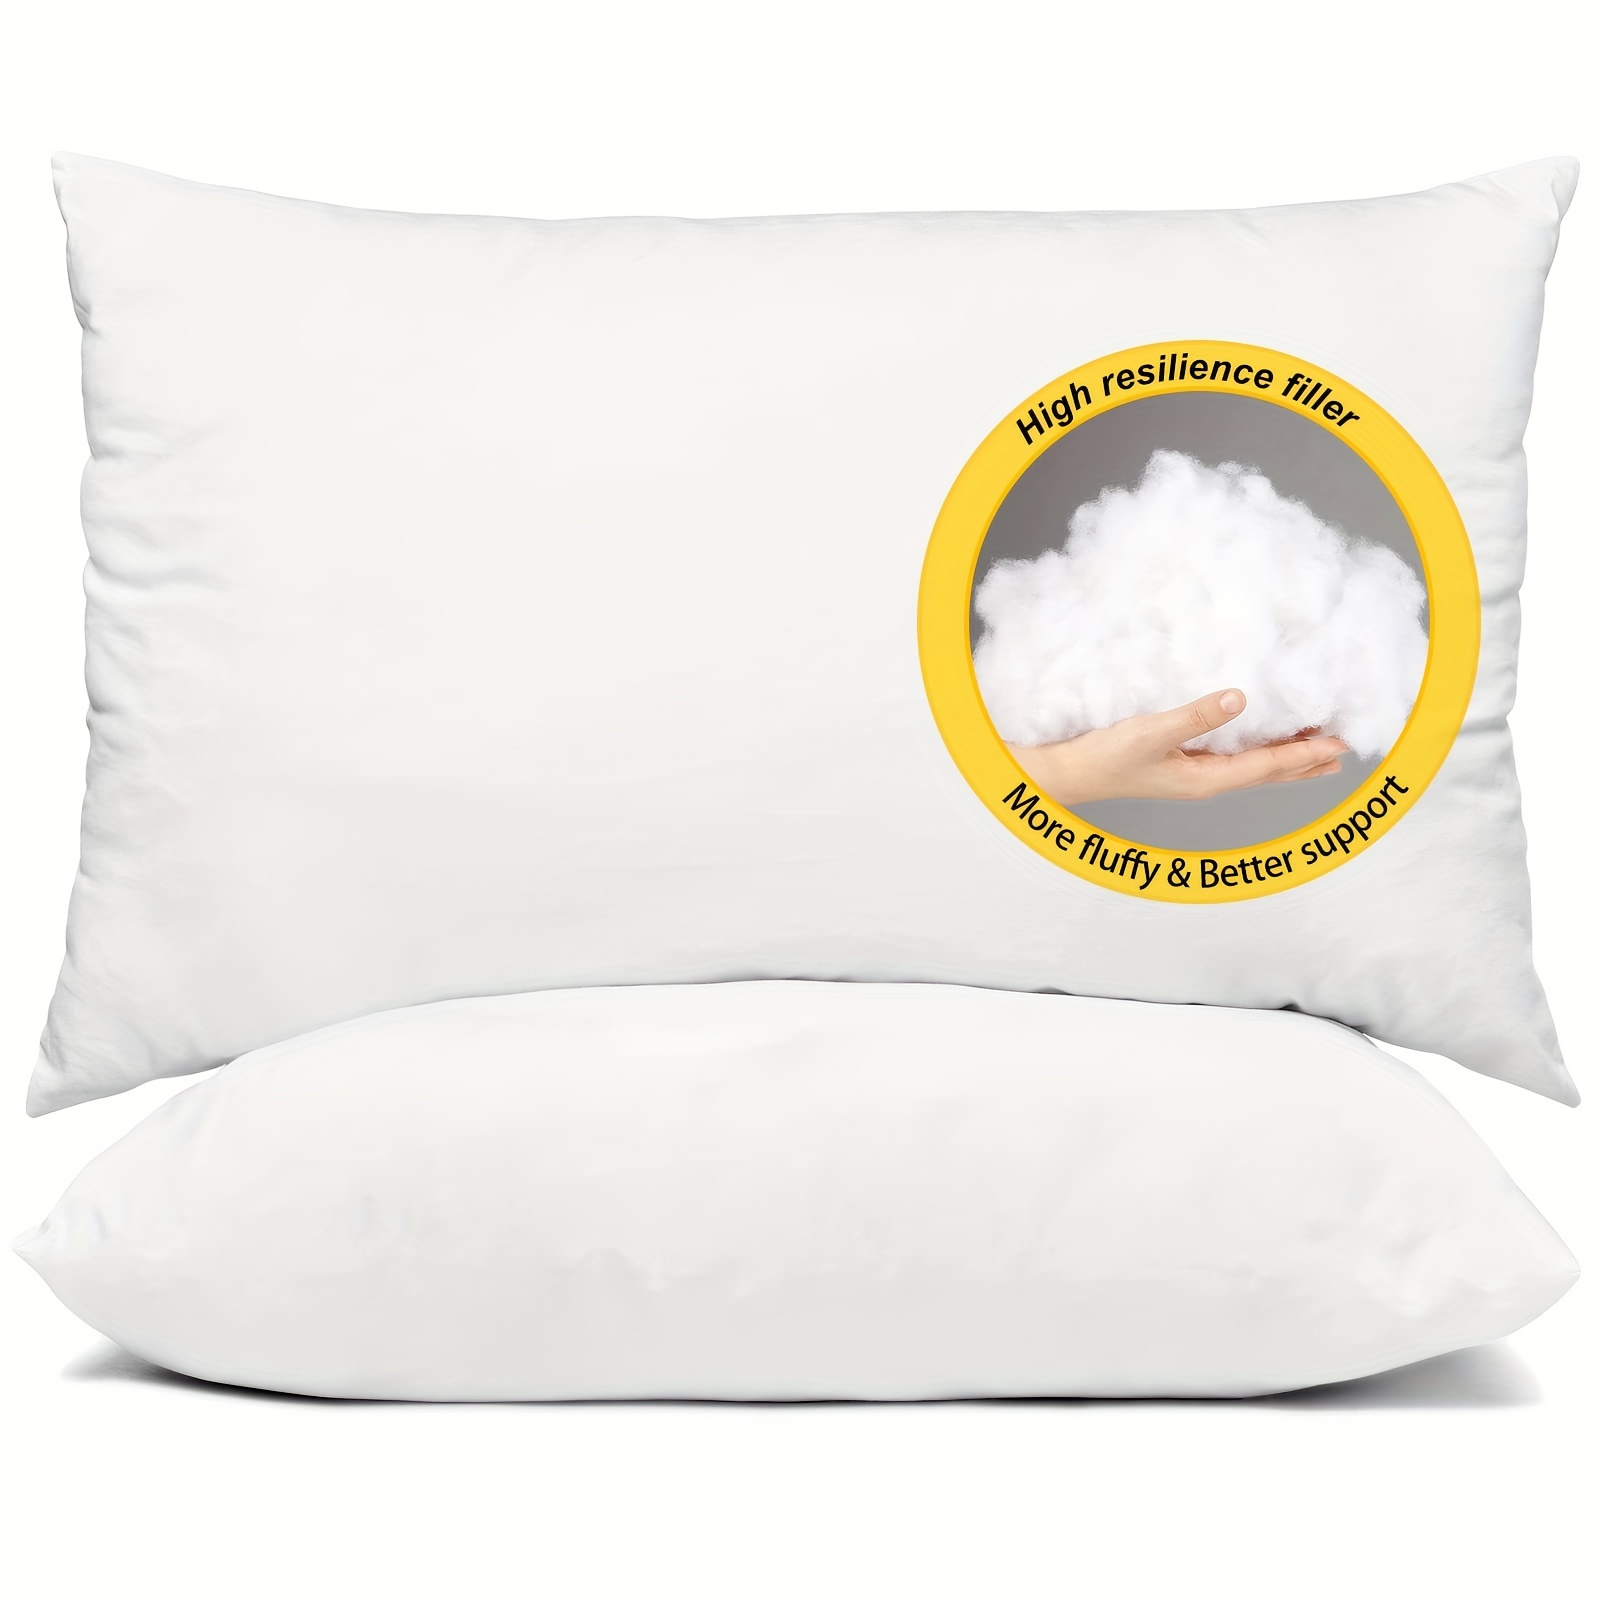 Ram Home (TM) Pillow Insert White - 18x18 Inch. Polyester Made - Machi –  moonrest